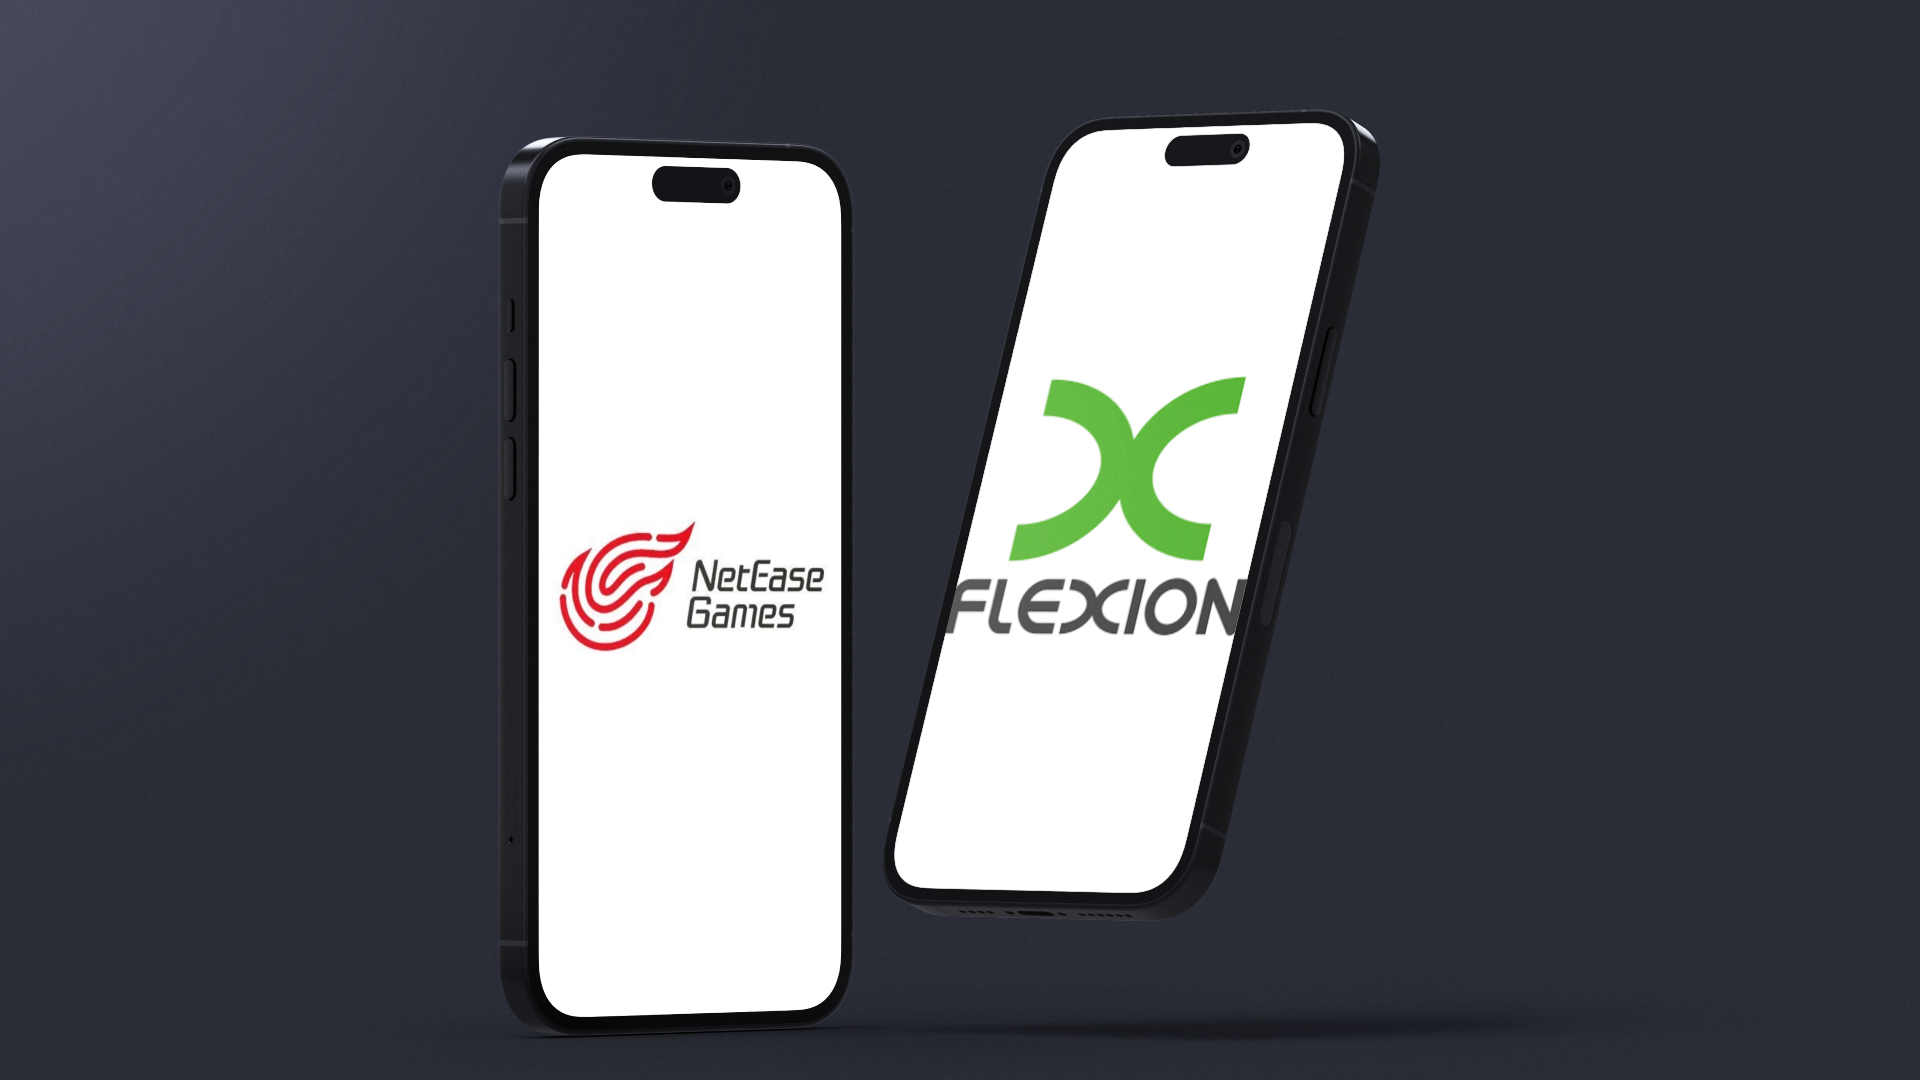 Flexion partners with NetEase